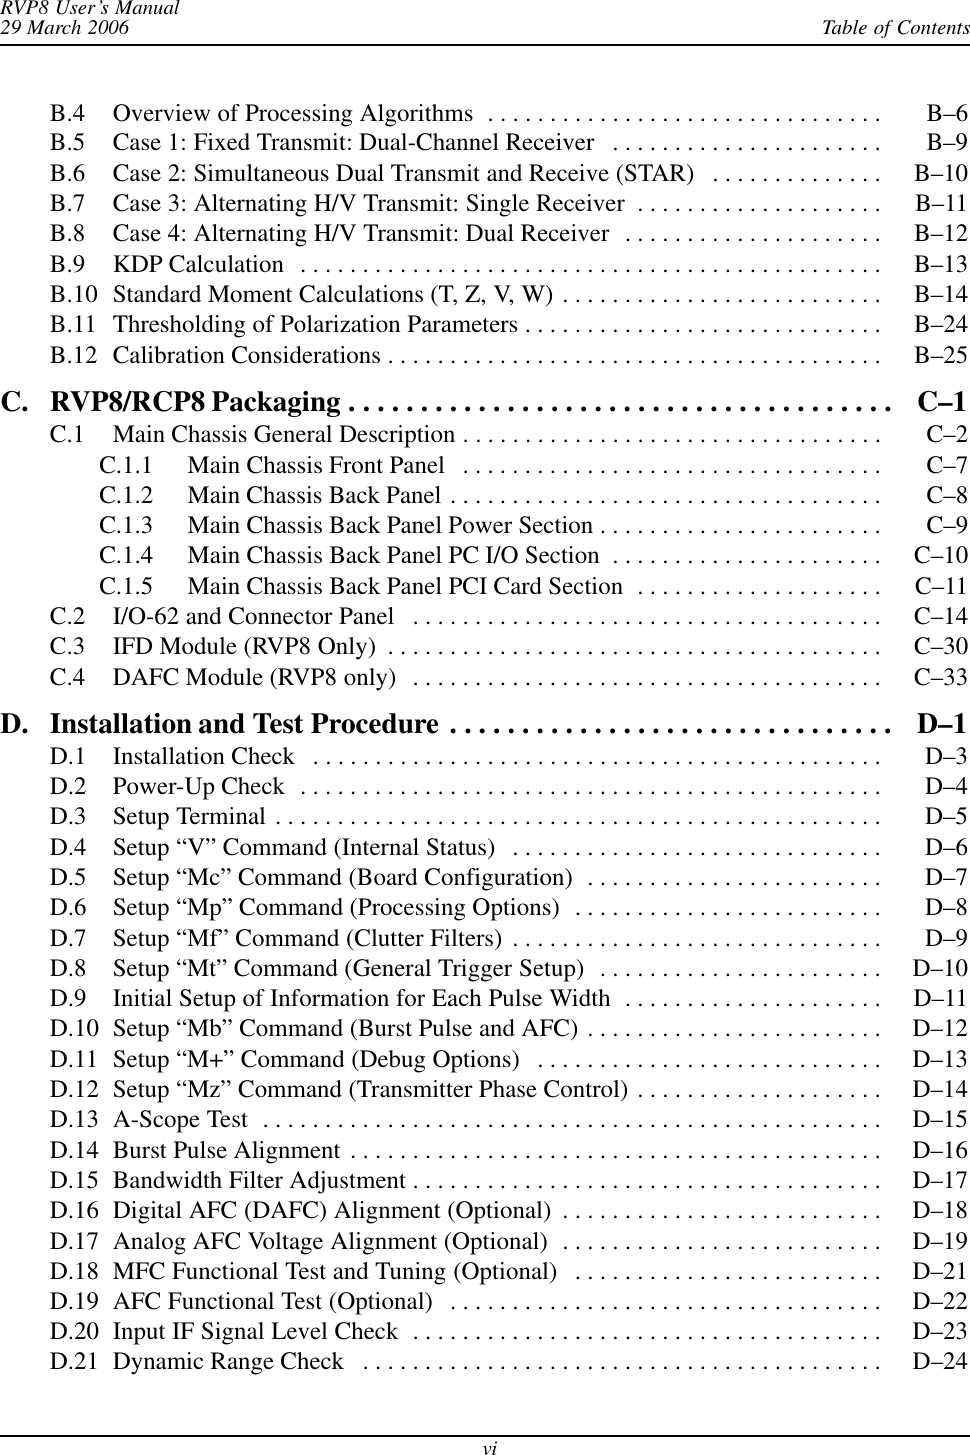 Table of ContentsRVP8 User’s Manual29 March 2006viB.4 Overview of Processing Algorithms B–6 . . . . . . . . . . . . . . . . . . . . . . . . . . . . . . . . B.5 Case 1: Fixed Transmit: Dual-Channel Receiver B–9 . . . . . . . . . . . . . . . . . . . . . . B.6 Case 2: Simultaneous Dual Transmit and Receive (STAR) B–10 . . . . . . . . . . . . . . B.7 Case 3: Alternating H/V Transmit: Single Receiver B–11 . . . . . . . . . . . . . . . . . . . . B.8 Case 4: Alternating H/V Transmit: Dual Receiver B–12 . . . . . . . . . . . . . . . . . . . . . B.9 KDP Calculation B–13 . . . . . . . . . . . . . . . . . . . . . . . . . . . . . . . . . . . . . . . . . . . . . . . B.10 Standard Moment Calculations (T, Z, V, W) B–14 . . . . . . . . . . . . . . . . . . . . . . . . . . B.11 Thresholding of Polarization Parameters B–24 . . . . . . . . . . . . . . . . . . . . . . . . . . . . . B.12 Calibration Considerations B–25 . . . . . . . . . . . . . . . . . . . . . . . . . . . . . . . . . . . . . . . . C. RVP8/RCP8 Packaging C–1 . . . . . . . . . . . . . . . . . . . . . . . . . . . . . . . . . . . . . . C.1 Main Chassis General Description C–2 . . . . . . . . . . . . . . . . . . . . . . . . . . . . . . . . . . C.1.1 Main Chassis Front Panel C–7 . . . . . . . . . . . . . . . . . . . . . . . . . . . . . . . . . . C.1.2 Main Chassis Back Panel C–8 . . . . . . . . . . . . . . . . . . . . . . . . . . . . . . . . . . . C.1.3 Main Chassis Back Panel Power Section C–9 . . . . . . . . . . . . . . . . . . . . . . . C.1.4 Main Chassis Back Panel PC I/O Section C–10 . . . . . . . . . . . . . . . . . . . . . . C.1.5 Main Chassis Back Panel PCI Card Section C–11 . . . . . . . . . . . . . . . . . . . . C.2 I/O-62 and Connector Panel C–14 . . . . . . . . . . . . . . . . . . . . . . . . . . . . . . . . . . . . . . C.3 IFD Module (RVP8 Only) C–30 . . . . . . . . . . . . . . . . . . . . . . . . . . . . . . . . . . . . . . . . C.4 DAFC Module (RVP8 only) C–33 . . . . . . . . . . . . . . . . . . . . . . . . . . . . . . . . . . . . . . D. Installation and Test Procedure D–1 . . . . . . . . . . . . . . . . . . . . . . . . . . . . . . . D.1 Installation Check D–3 . . . . . . . . . . . . . . . . . . . . . . . . . . . . . . . . . . . . . . . . . . . . . . D.2 Power-Up Check D–4 . . . . . . . . . . . . . . . . . . . . . . . . . . . . . . . . . . . . . . . . . . . . . . . D.3 Setup Terminal D–5 . . . . . . . . . . . . . . . . . . . . . . . . . . . . . . . . . . . . . . . . . . . . . . . . . D.4 Setup “V” Command (Internal Status) D–6 . . . . . . . . . . . . . . . . . . . . . . . . . . . . . . D.5 Setup “Mc” Command (Board Configuration) D–7 . . . . . . . . . . . . . . . . . . . . . . . . D.6 Setup “Mp” Command (Processing Options) D–8 . . . . . . . . . . . . . . . . . . . . . . . . . D.7 Setup “Mf” Command (Clutter Filters) D–9 . . . . . . . . . . . . . . . . . . . . . . . . . . . . . . D.8 Setup “Mt” Command (General Trigger Setup) D–10 . . . . . . . . . . . . . . . . . . . . . . . D.9 Initial Setup of Information for Each Pulse Width D–11 . . . . . . . . . . . . . . . . . . . . . D.10 Setup “Mb” Command (Burst Pulse and AFC) D–12 . . . . . . . . . . . . . . . . . . . . . . . . D.11 Setup “M+” Command (Debug Options) D–13 . . . . . . . . . . . . . . . . . . . . . . . . . . . . D.12 Setup “Mz” Command (Transmitter Phase Control) D–14 . . . . . . . . . . . . . . . . . . . . D.13 A-Scope Test D–15 . . . . . . . . . . . . . . . . . . . . . . . . . . . . . . . . . . . . . . . . . . . . . . . . . . D.14 Burst Pulse Alignment D–16 . . . . . . . . . . . . . . . . . . . . . . . . . . . . . . . . . . . . . . . . . . . D.15 Bandwidth Filter Adjustment D–17 . . . . . . . . . . . . . . . . . . . . . . . . . . . . . . . . . . . . . . D.16 Digital AFC (DAFC) Alignment (Optional) D–18 . . . . . . . . . . . . . . . . . . . . . . . . . . D.17 Analog AFC Voltage Alignment (Optional) D–19 . . . . . . . . . . . . . . . . . . . . . . . . . . D.18 MFC Functional Test and Tuning (Optional) D–21 . . . . . . . . . . . . . . . . . . . . . . . . . D.19 AFC Functional Test (Optional) D–22 . . . . . . . . . . . . . . . . . . . . . . . . . . . . . . . . . . . D.20 Input IF Signal Level Check D–23 . . . . . . . . . . . . . . . . . . . . . . . . . . . . . . . . . . . . . . D.21 Dynamic Range Check D–24 . . . . . . . . . . . . . . . . . . . . . . . . . . . . . . . . . . . . . . . . . . 